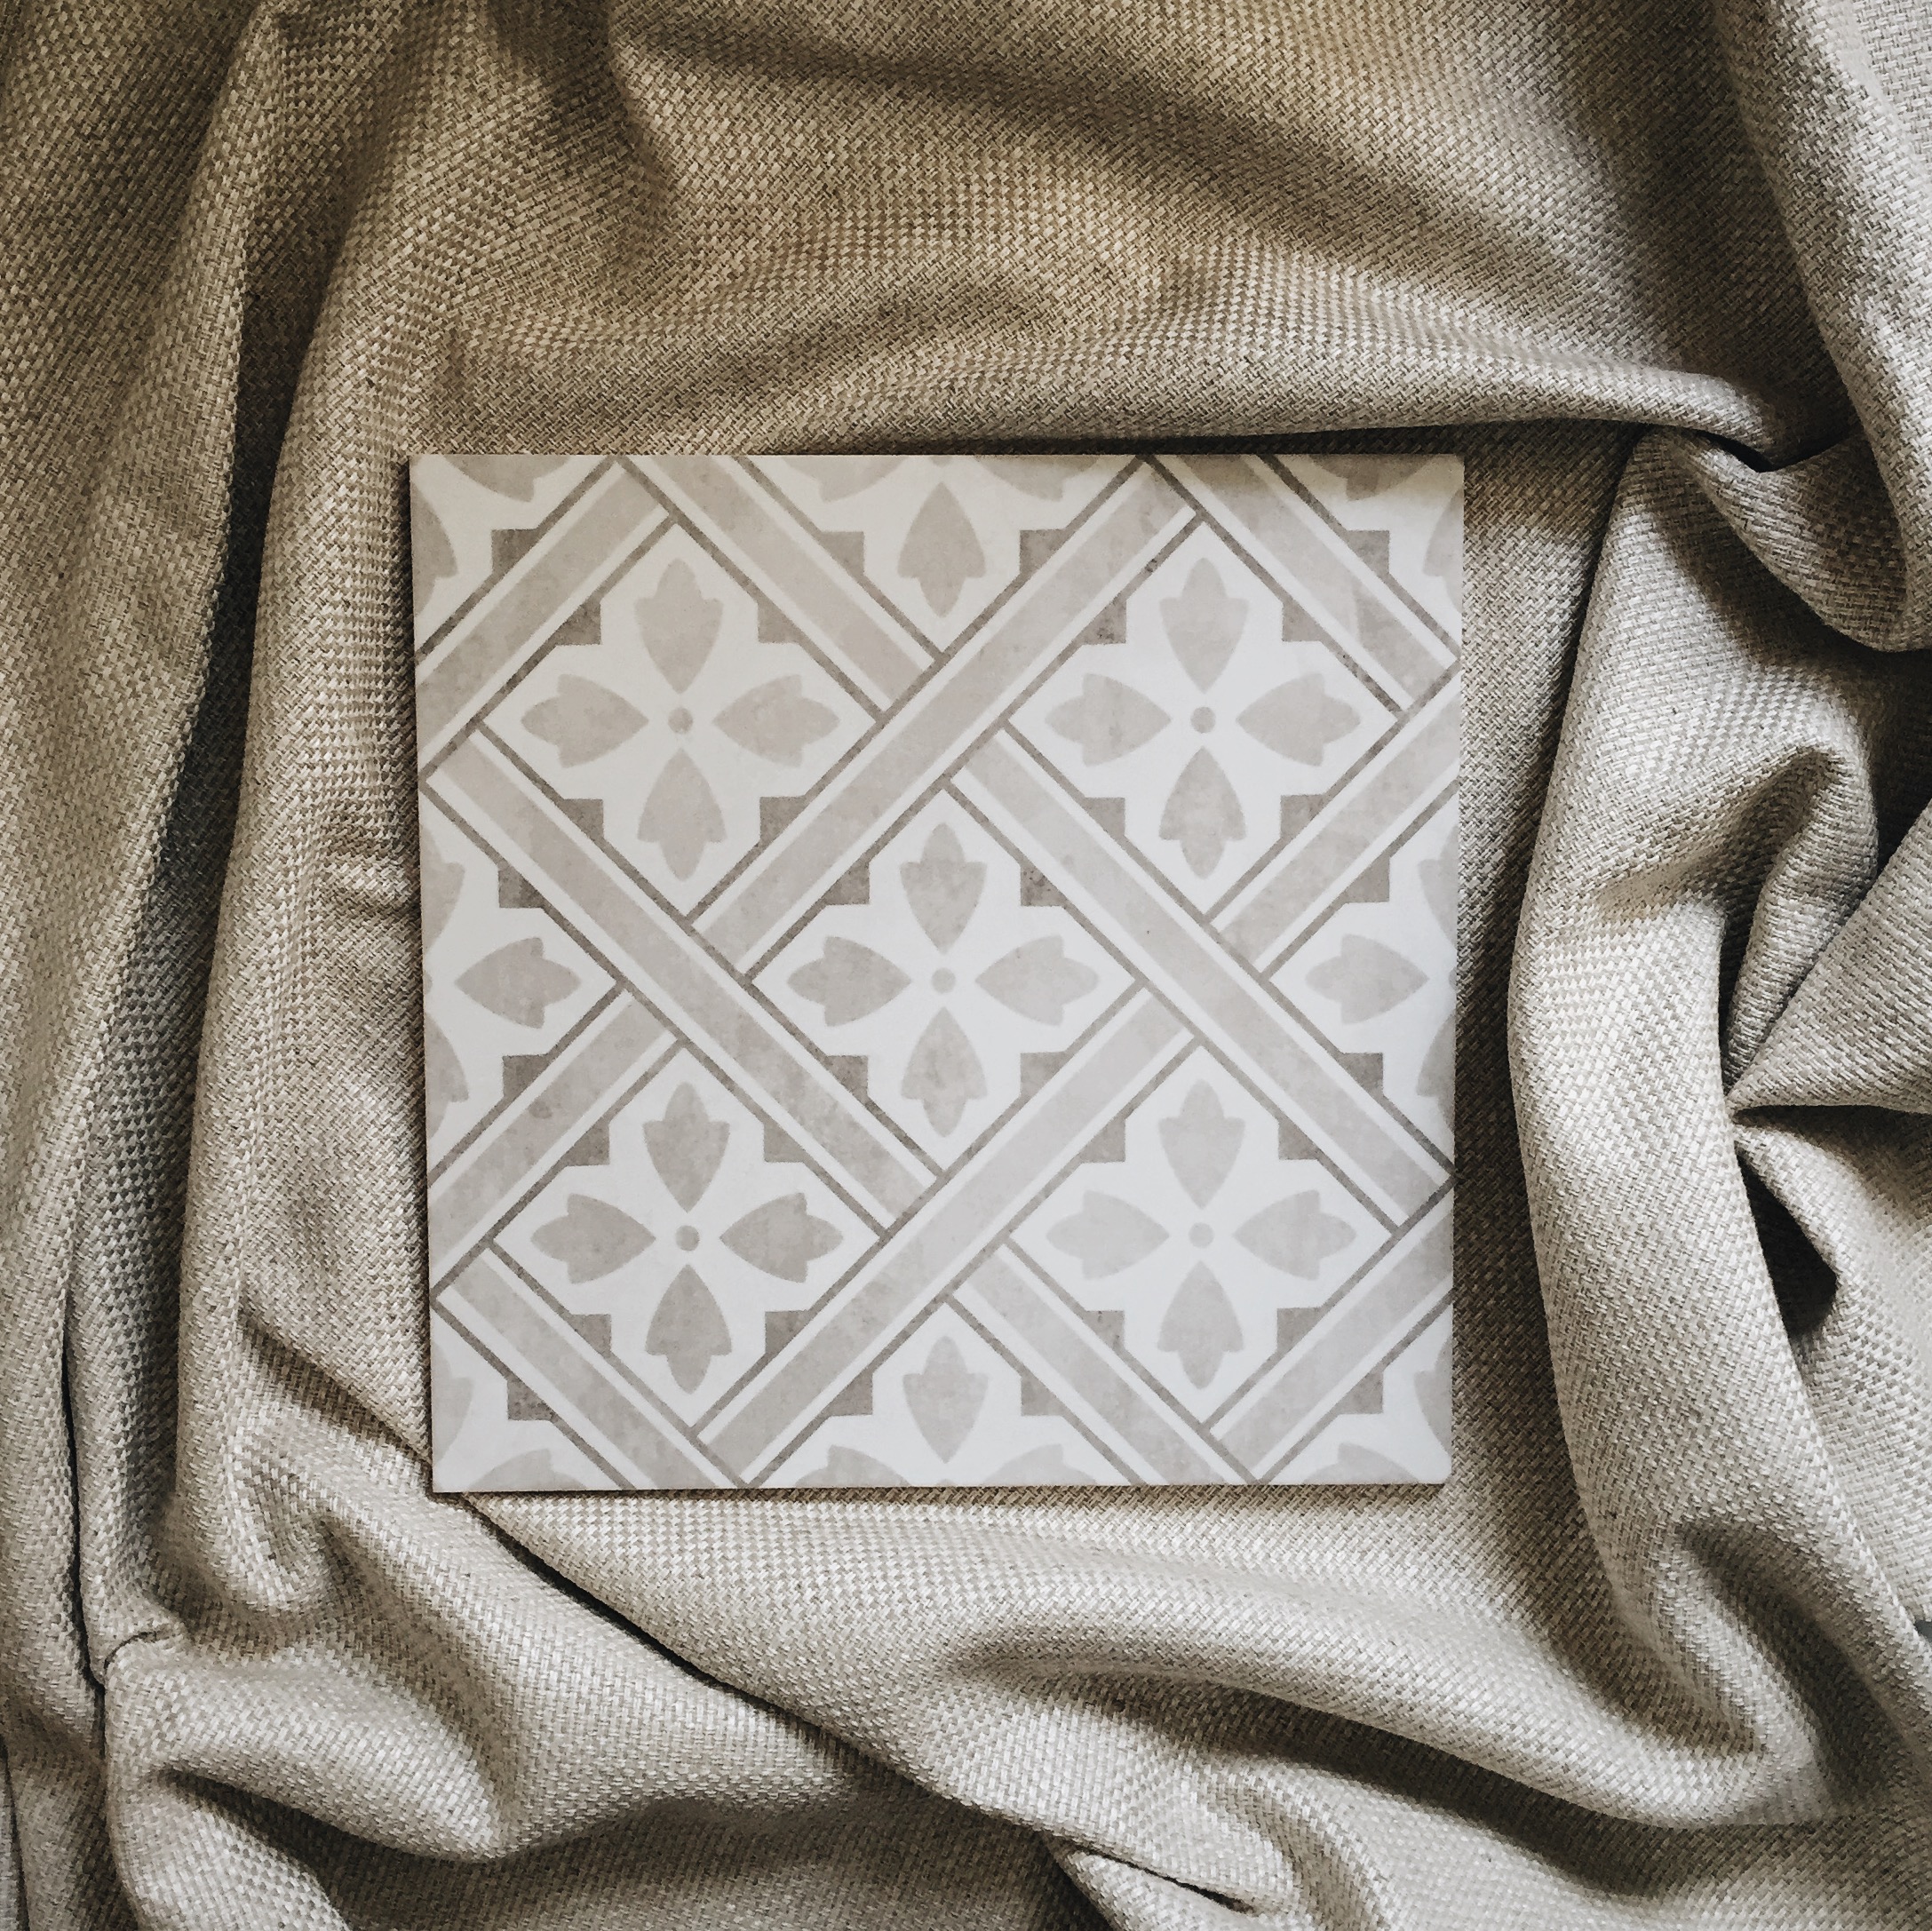 Jane's British Ceramic Tiles - Laura Ashley Blog